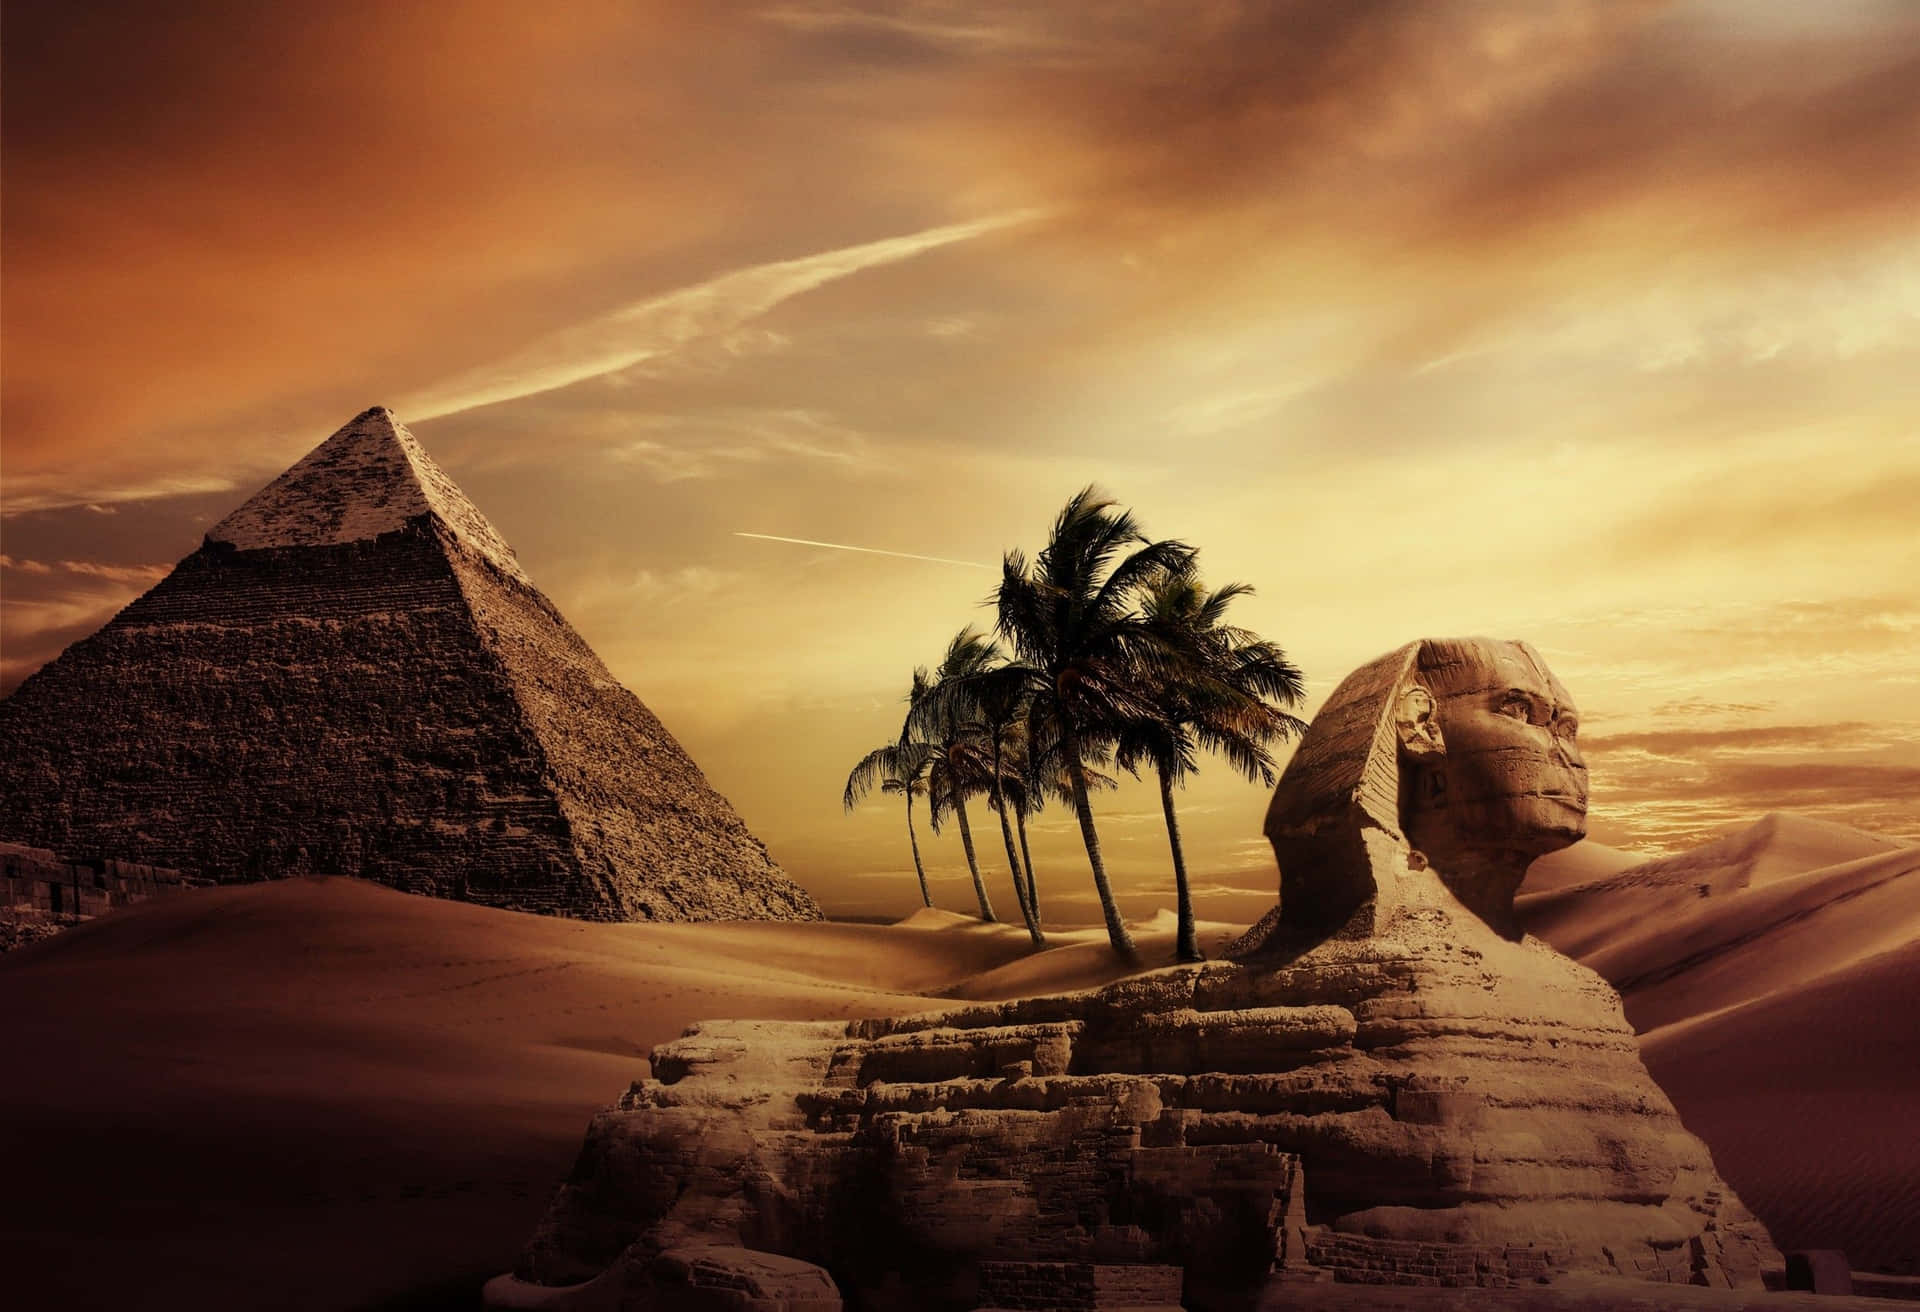 Majestic Pyramids of Giza in Egypt